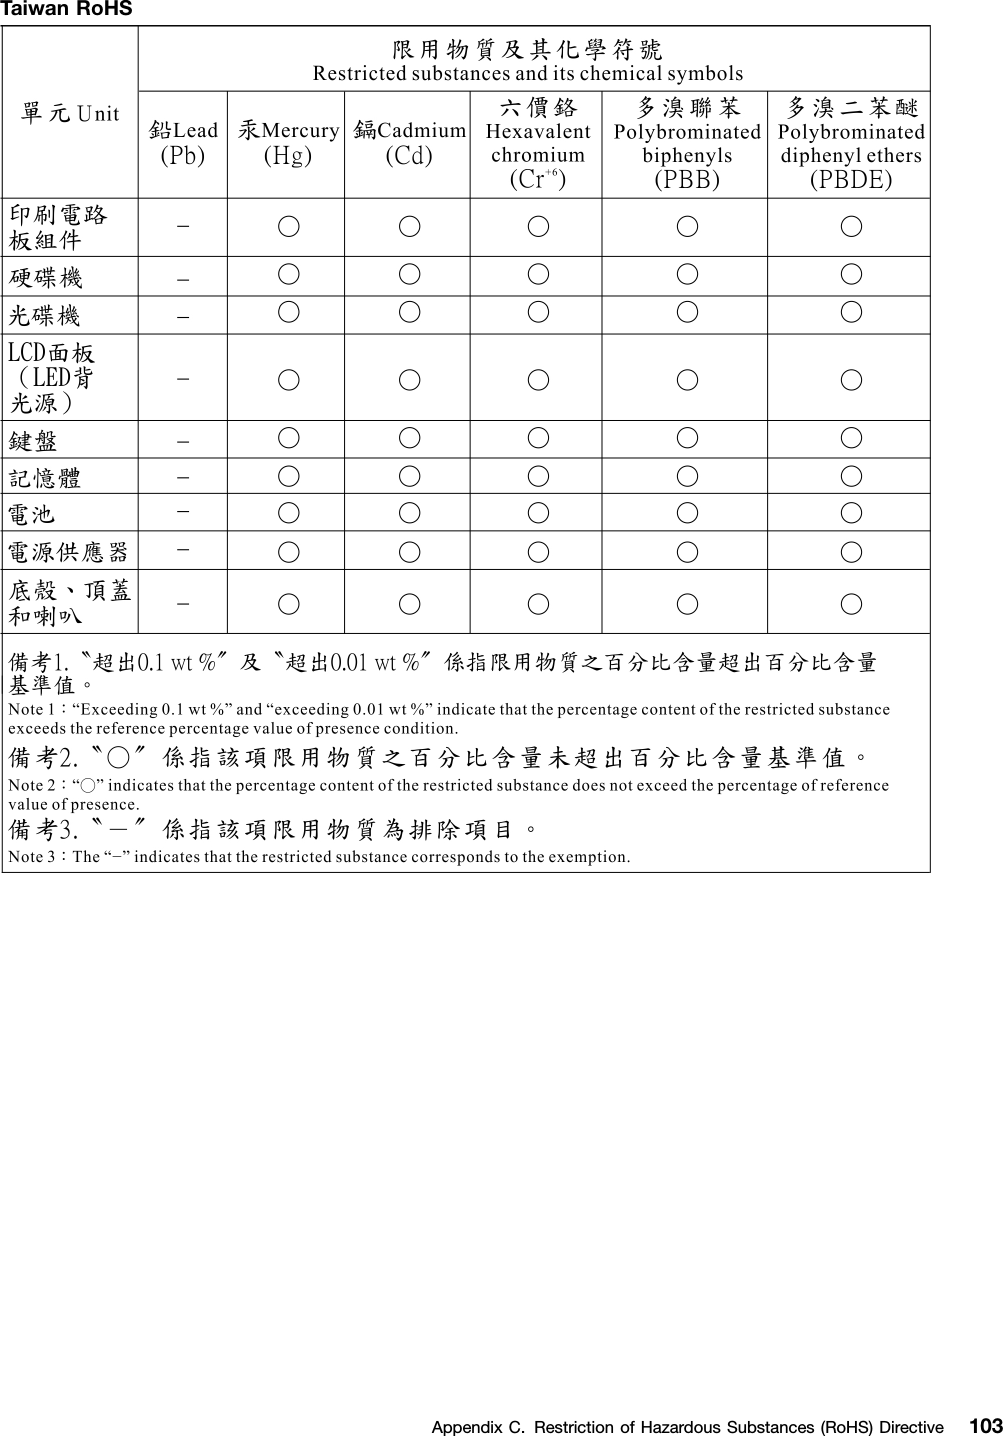 TaiwanRoHSAppendixC.RestrictionofHazardousSubstances(RoHS)Directive103